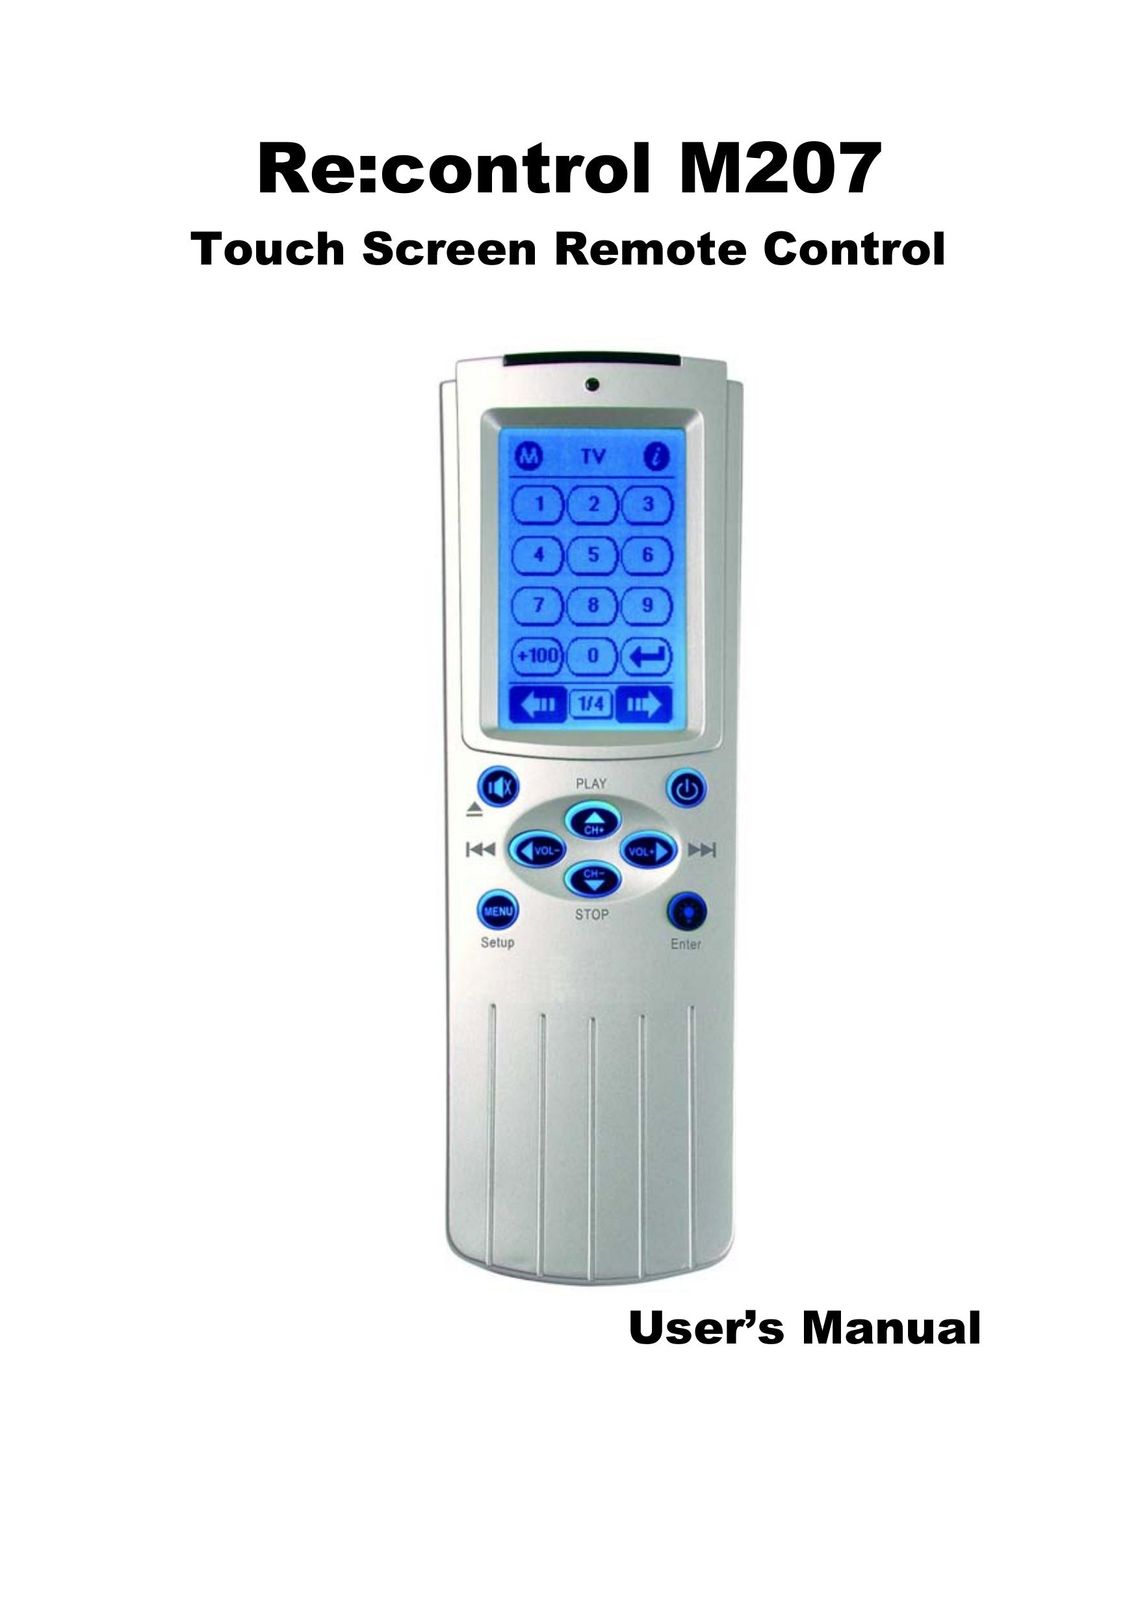 Revox Recontrol M207 Universal Remote User Manual